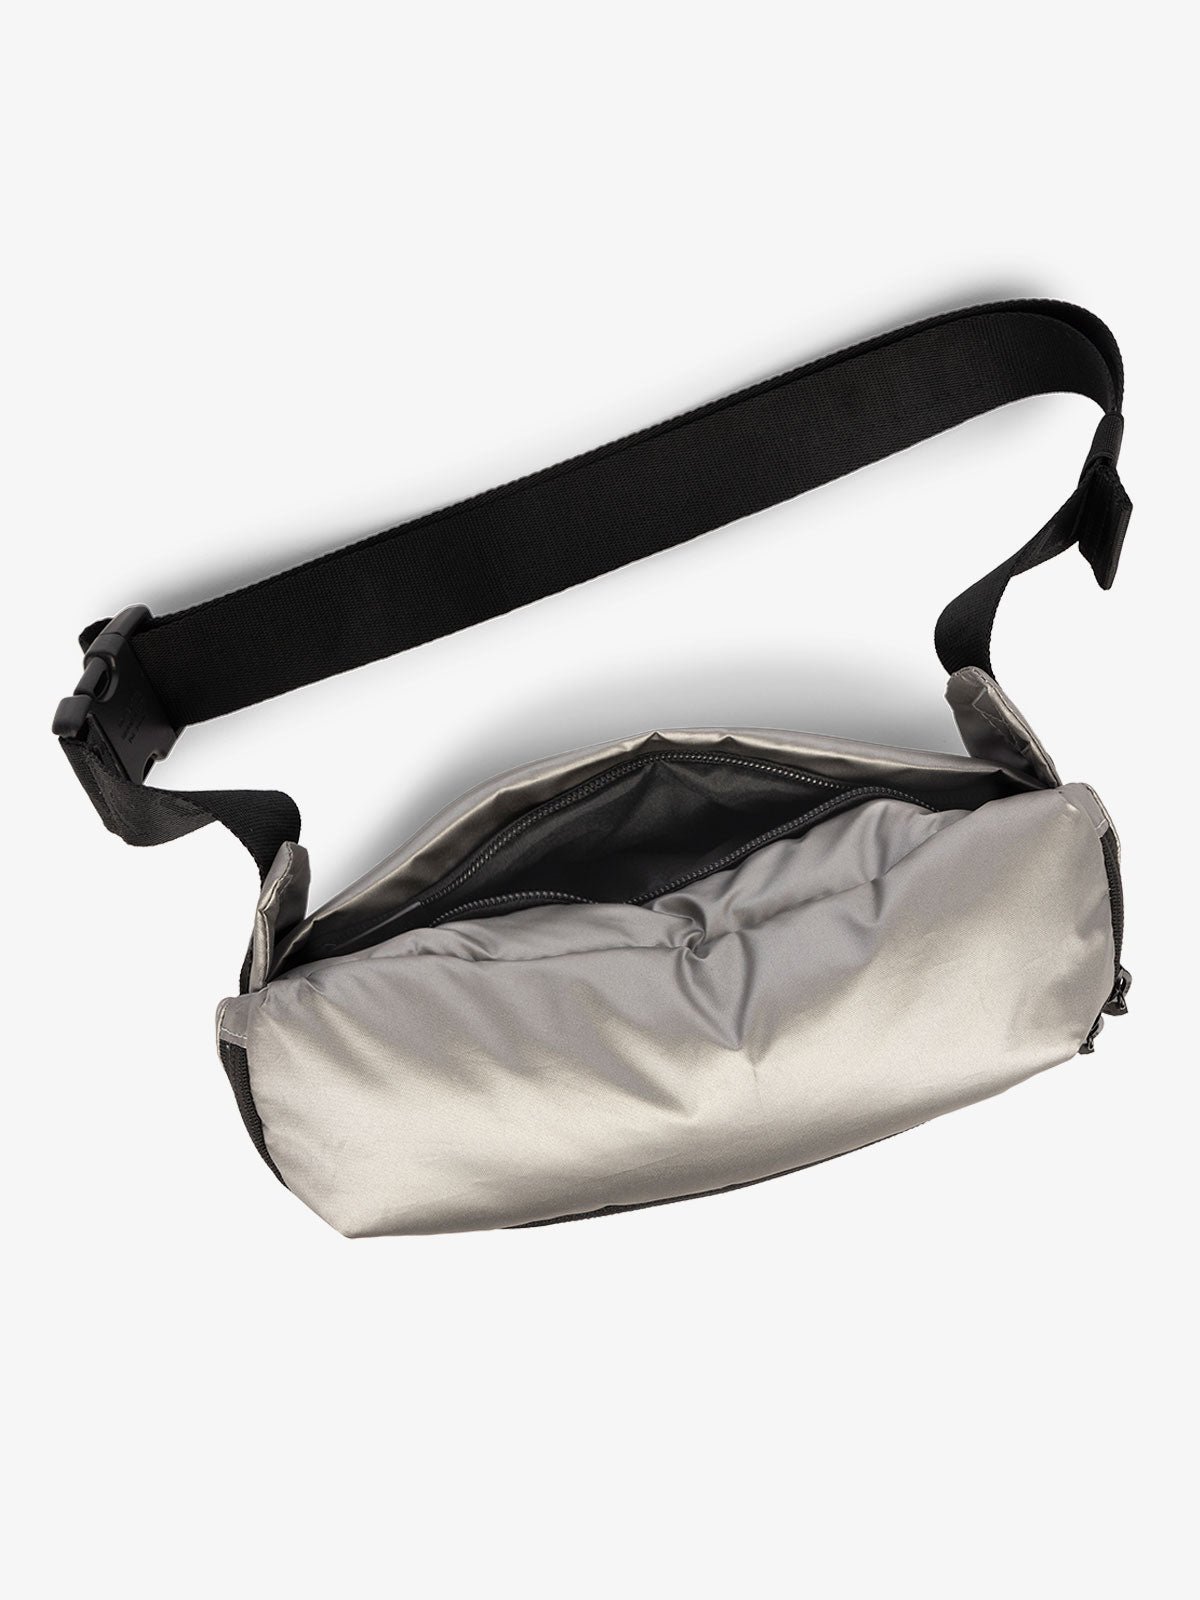 CALPAK Luka Belt Bag with adjustable strap and hidden back pocket in metallic silver gunmetal